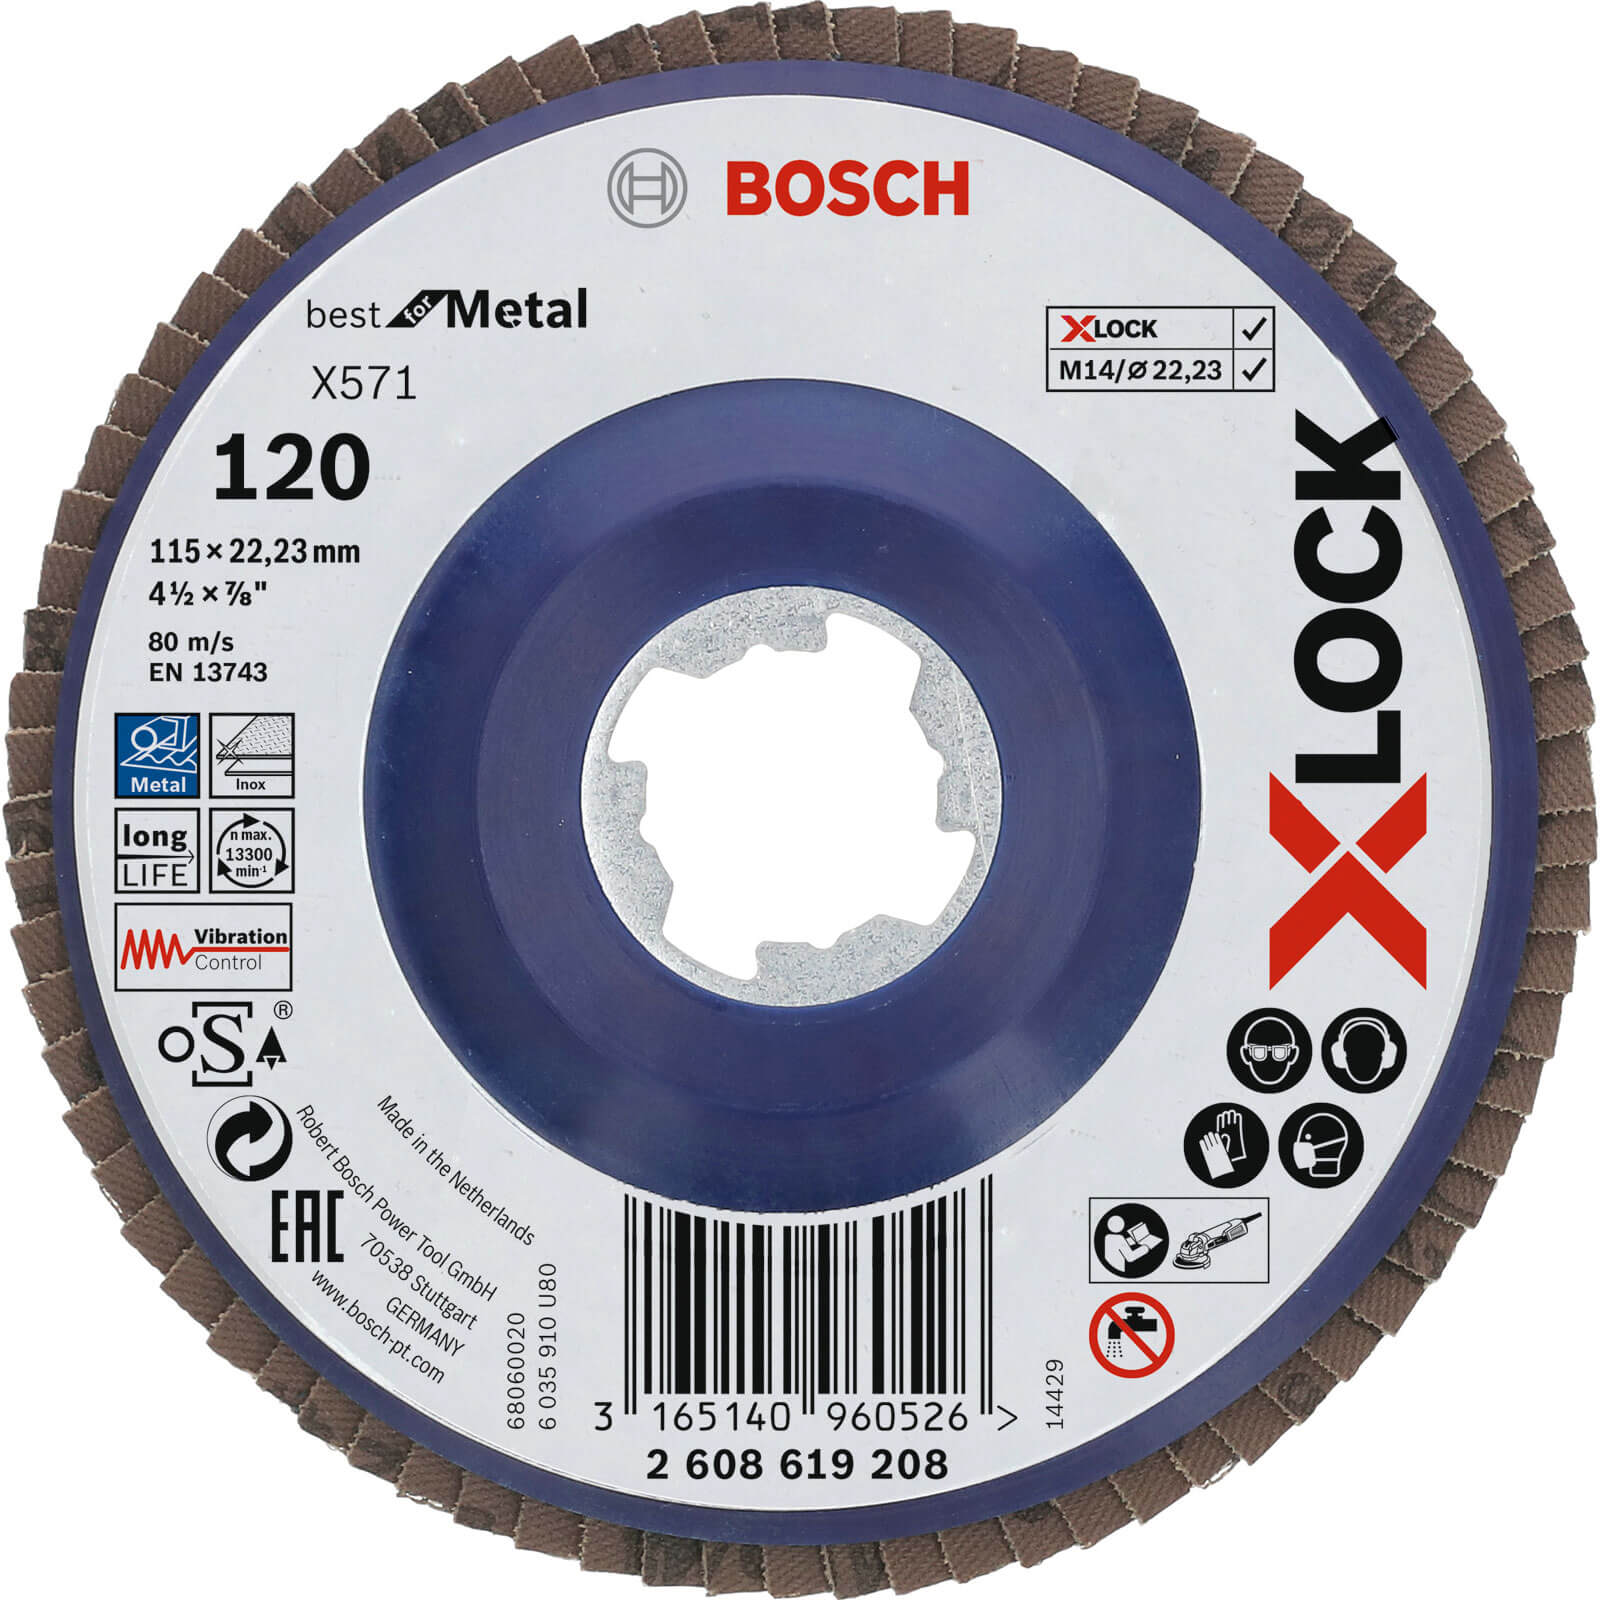 Photo of Bosch X Lock Zirconium Abrasive Straight Flap Disc 115mm 120g Pack Of 1